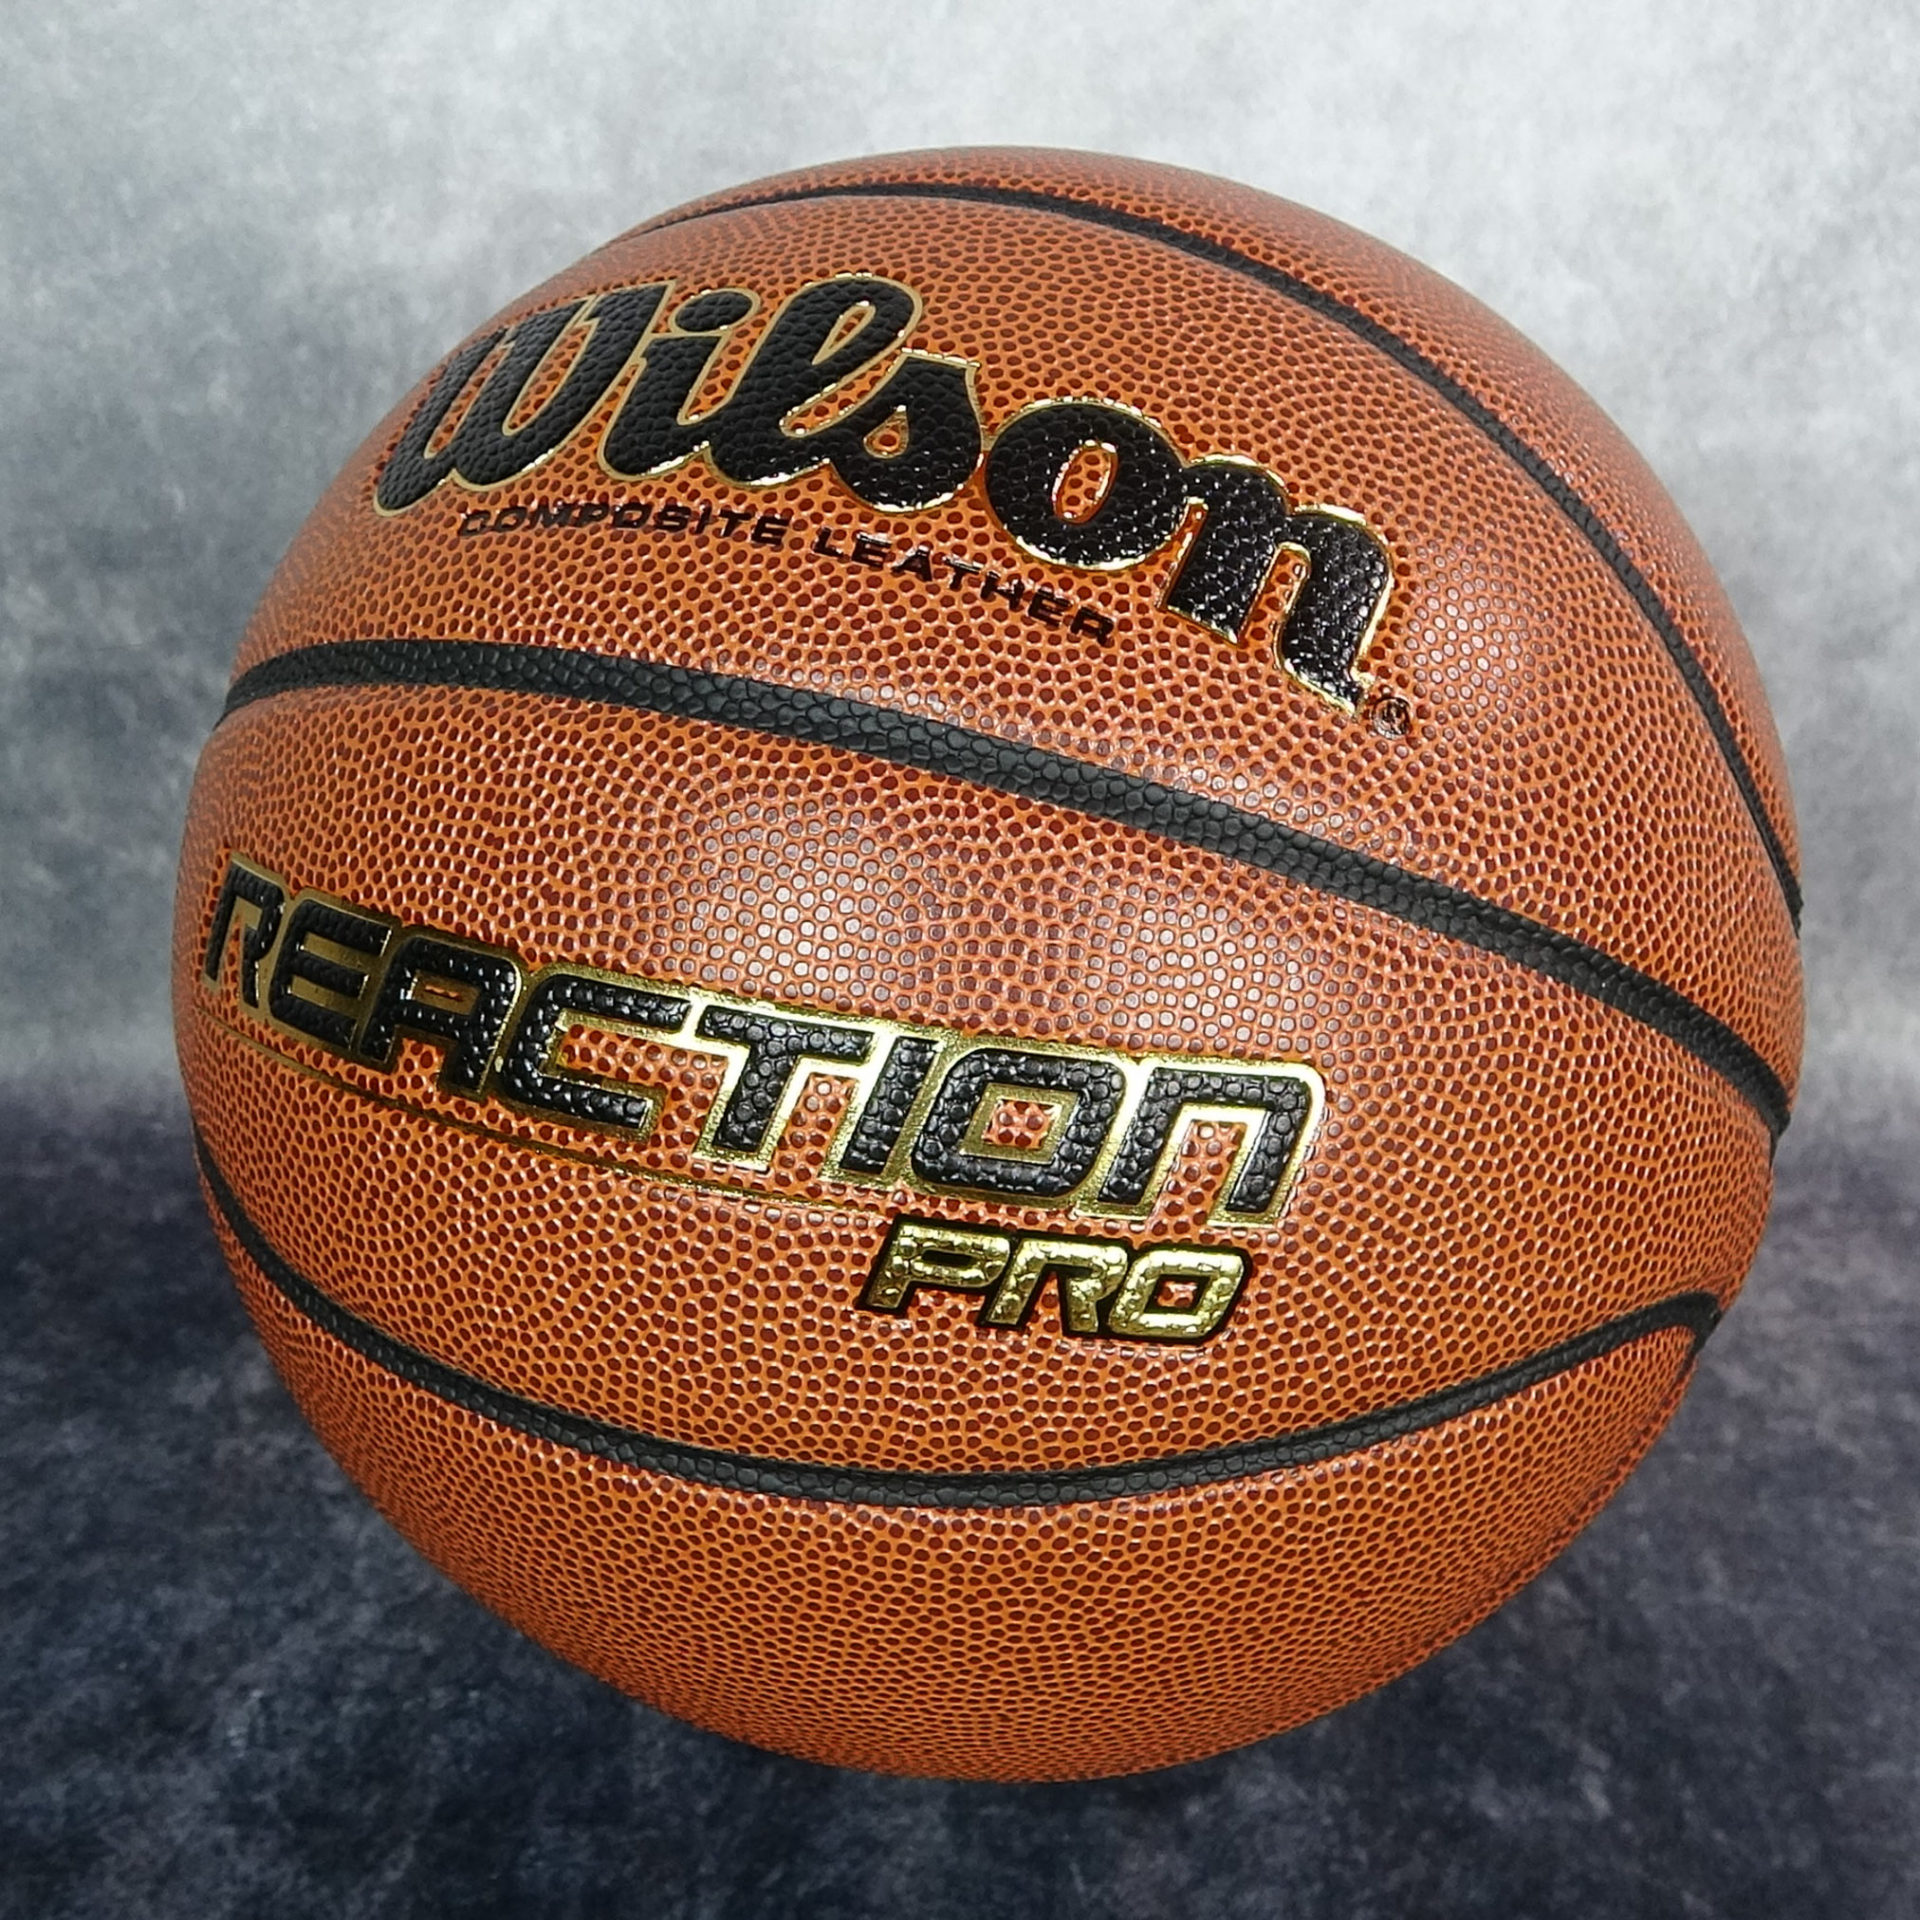 Balon Basquetbol Pelota Basketball Wilson Nba L.a Lakers N°7 Color